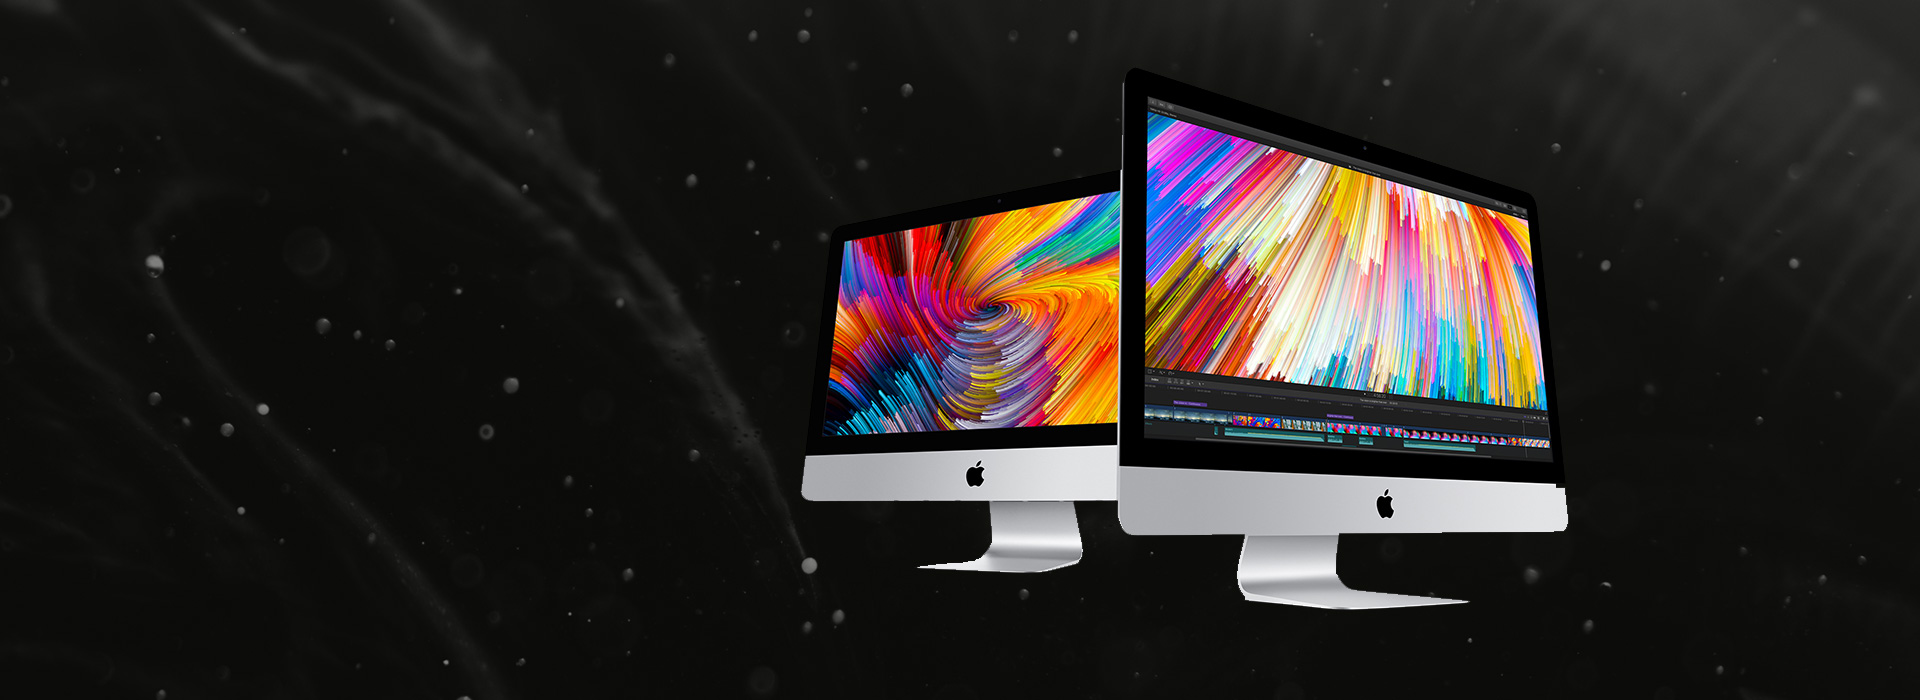 Apple iMac se echipeaza cu Radeon Pro 500 Series – performante uimitoare la rezolutii 5K